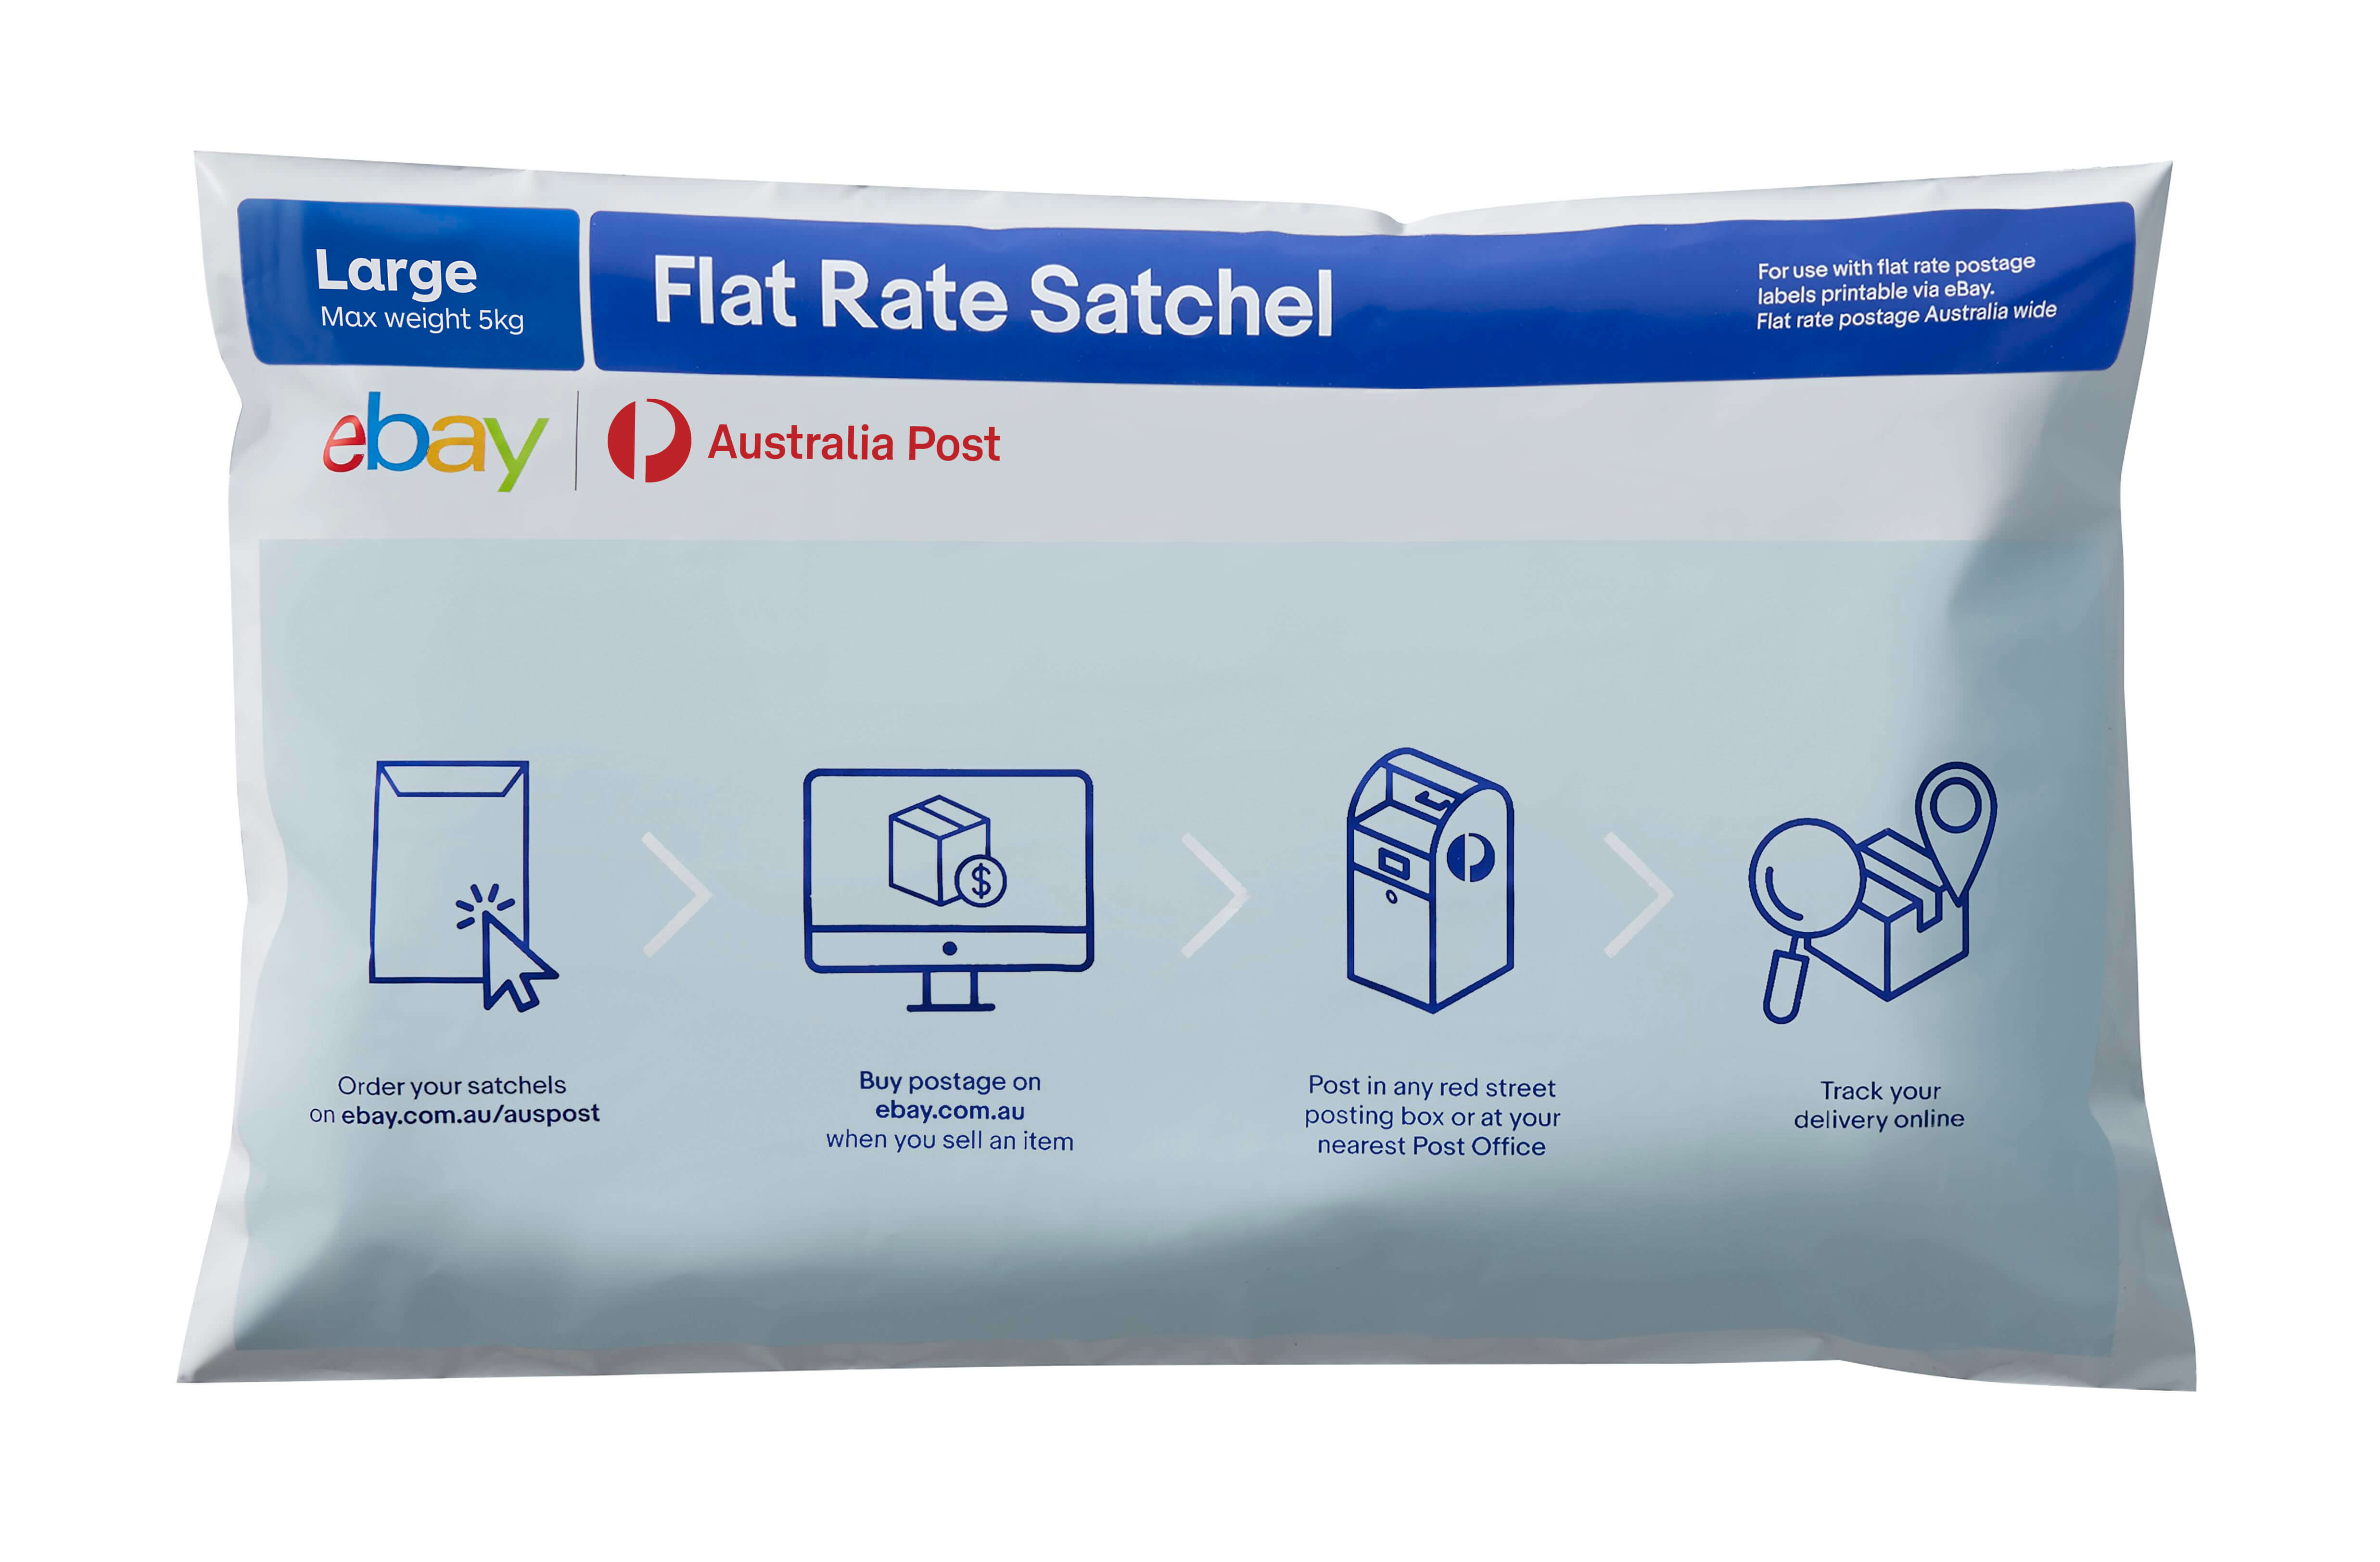 Flat rate satchel 3kg